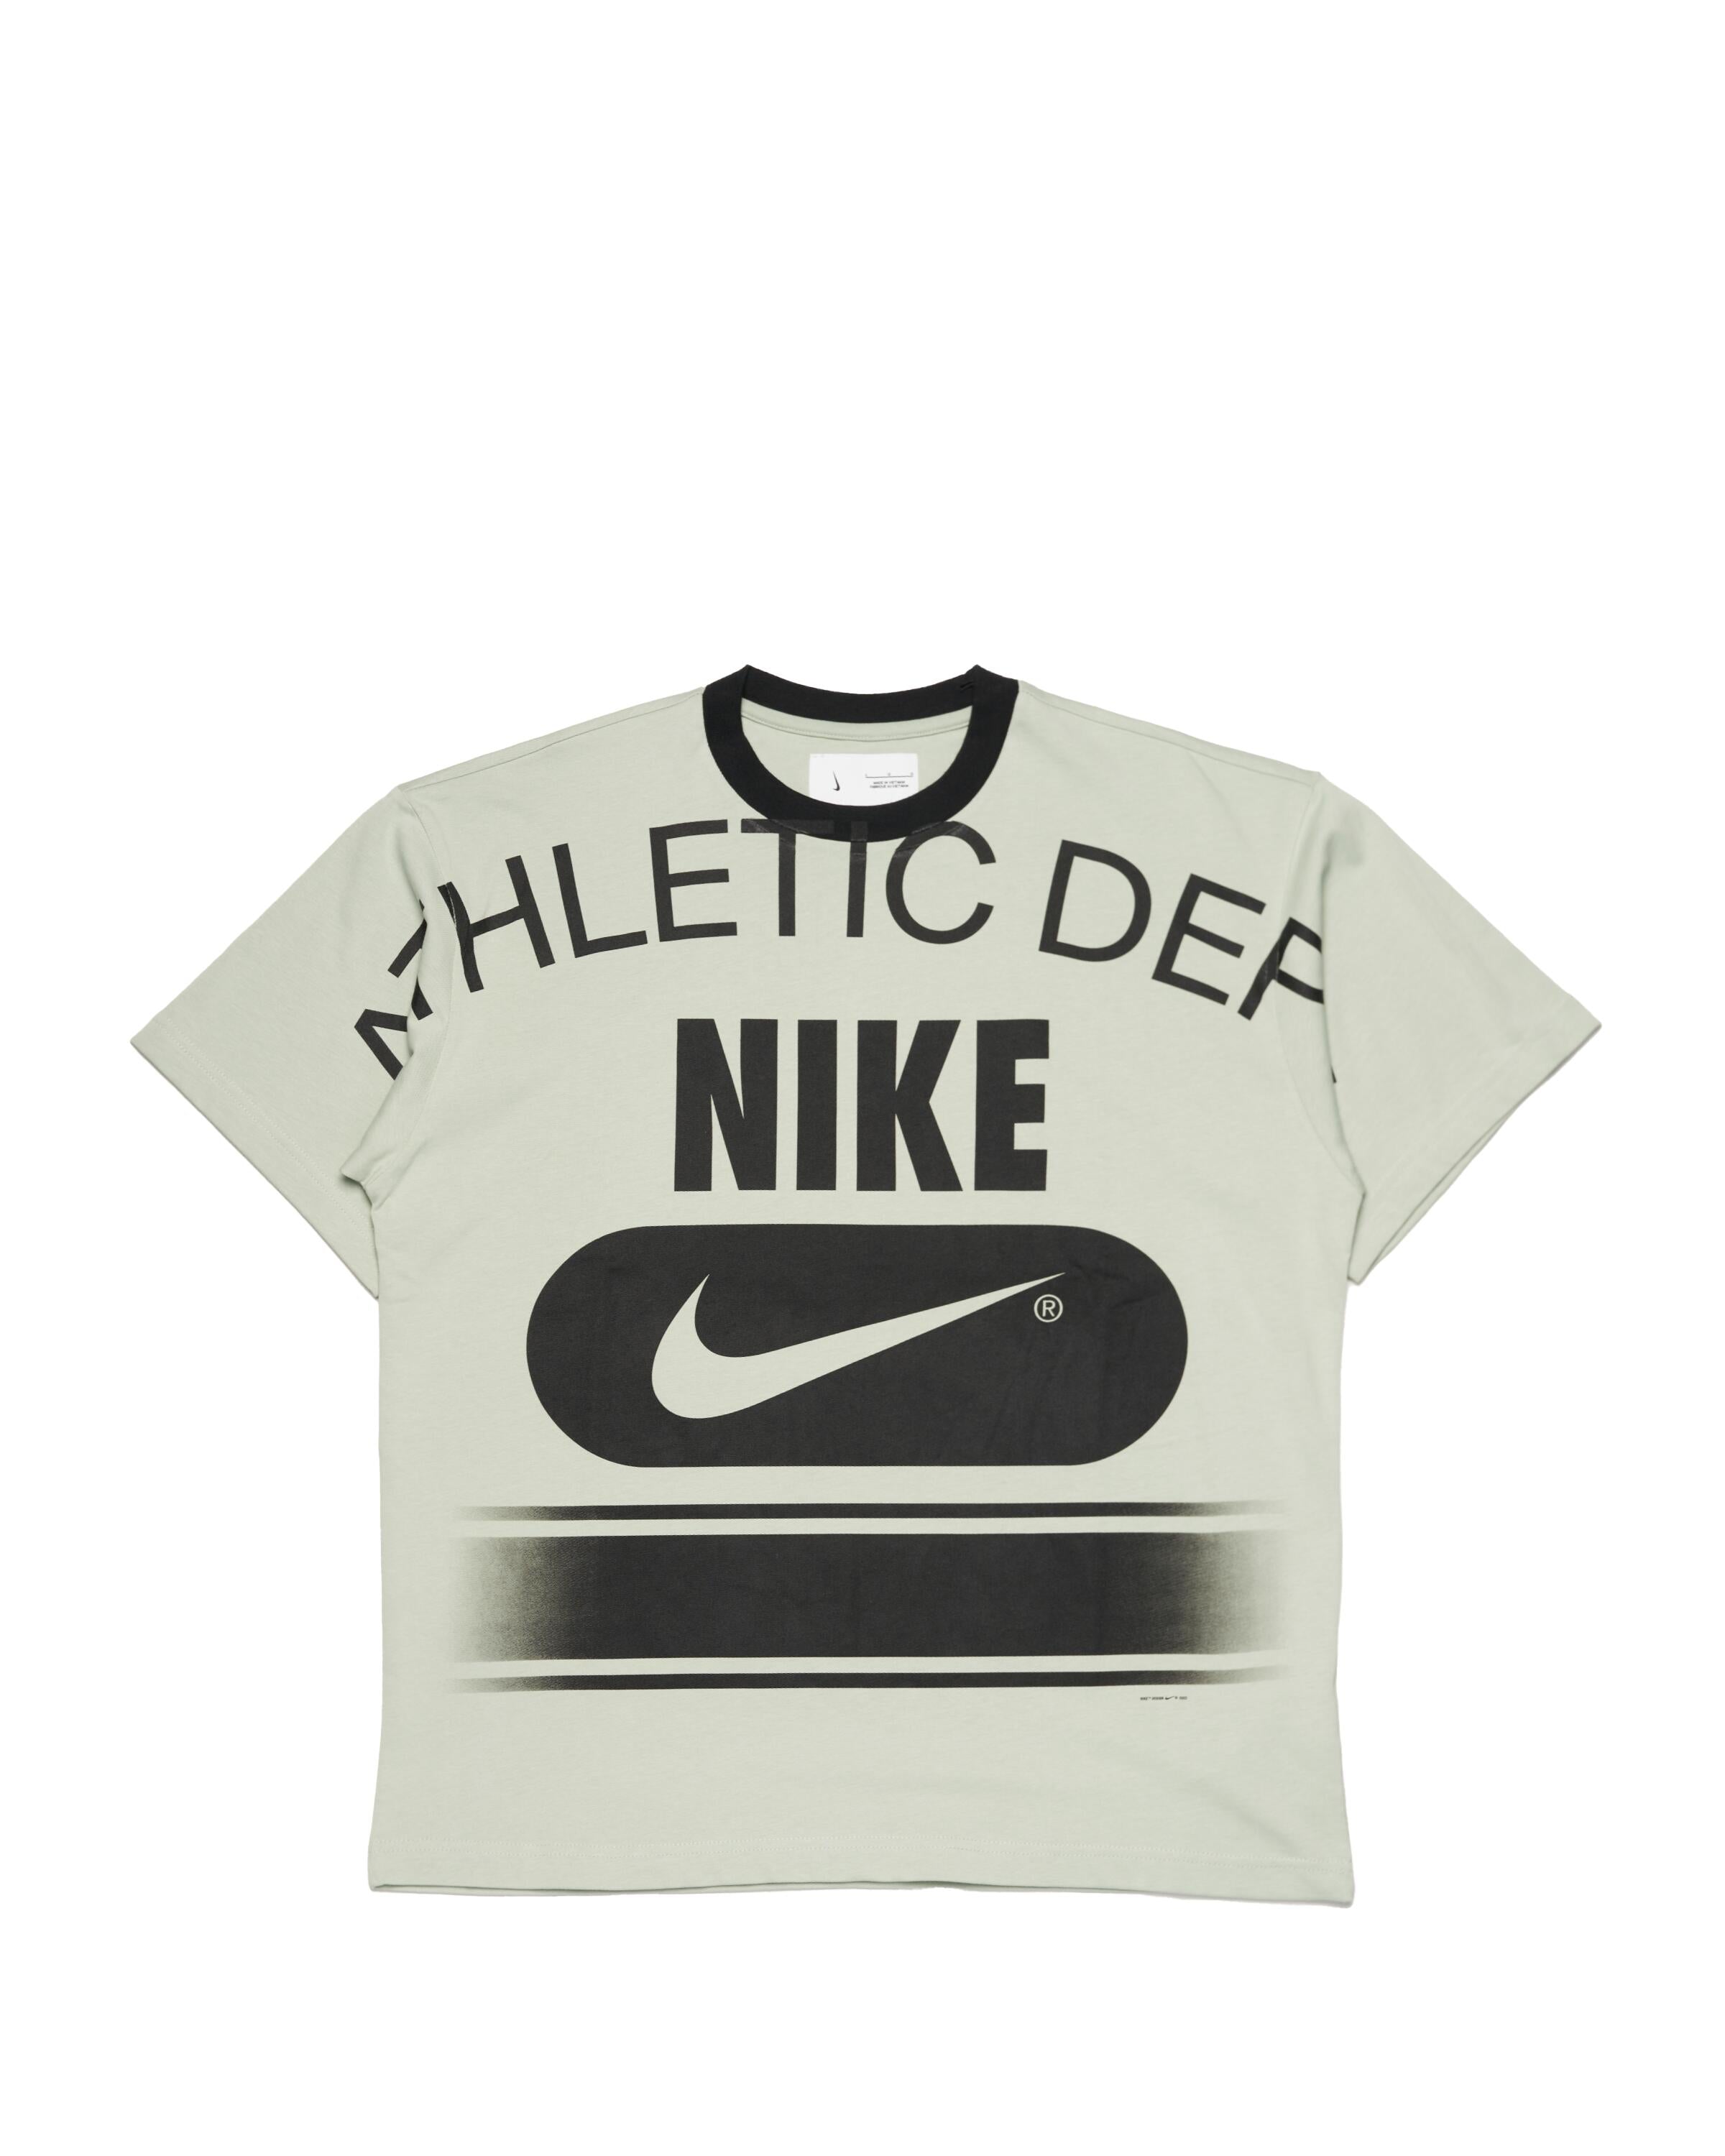 Nike MASSIVE DEPT TEE